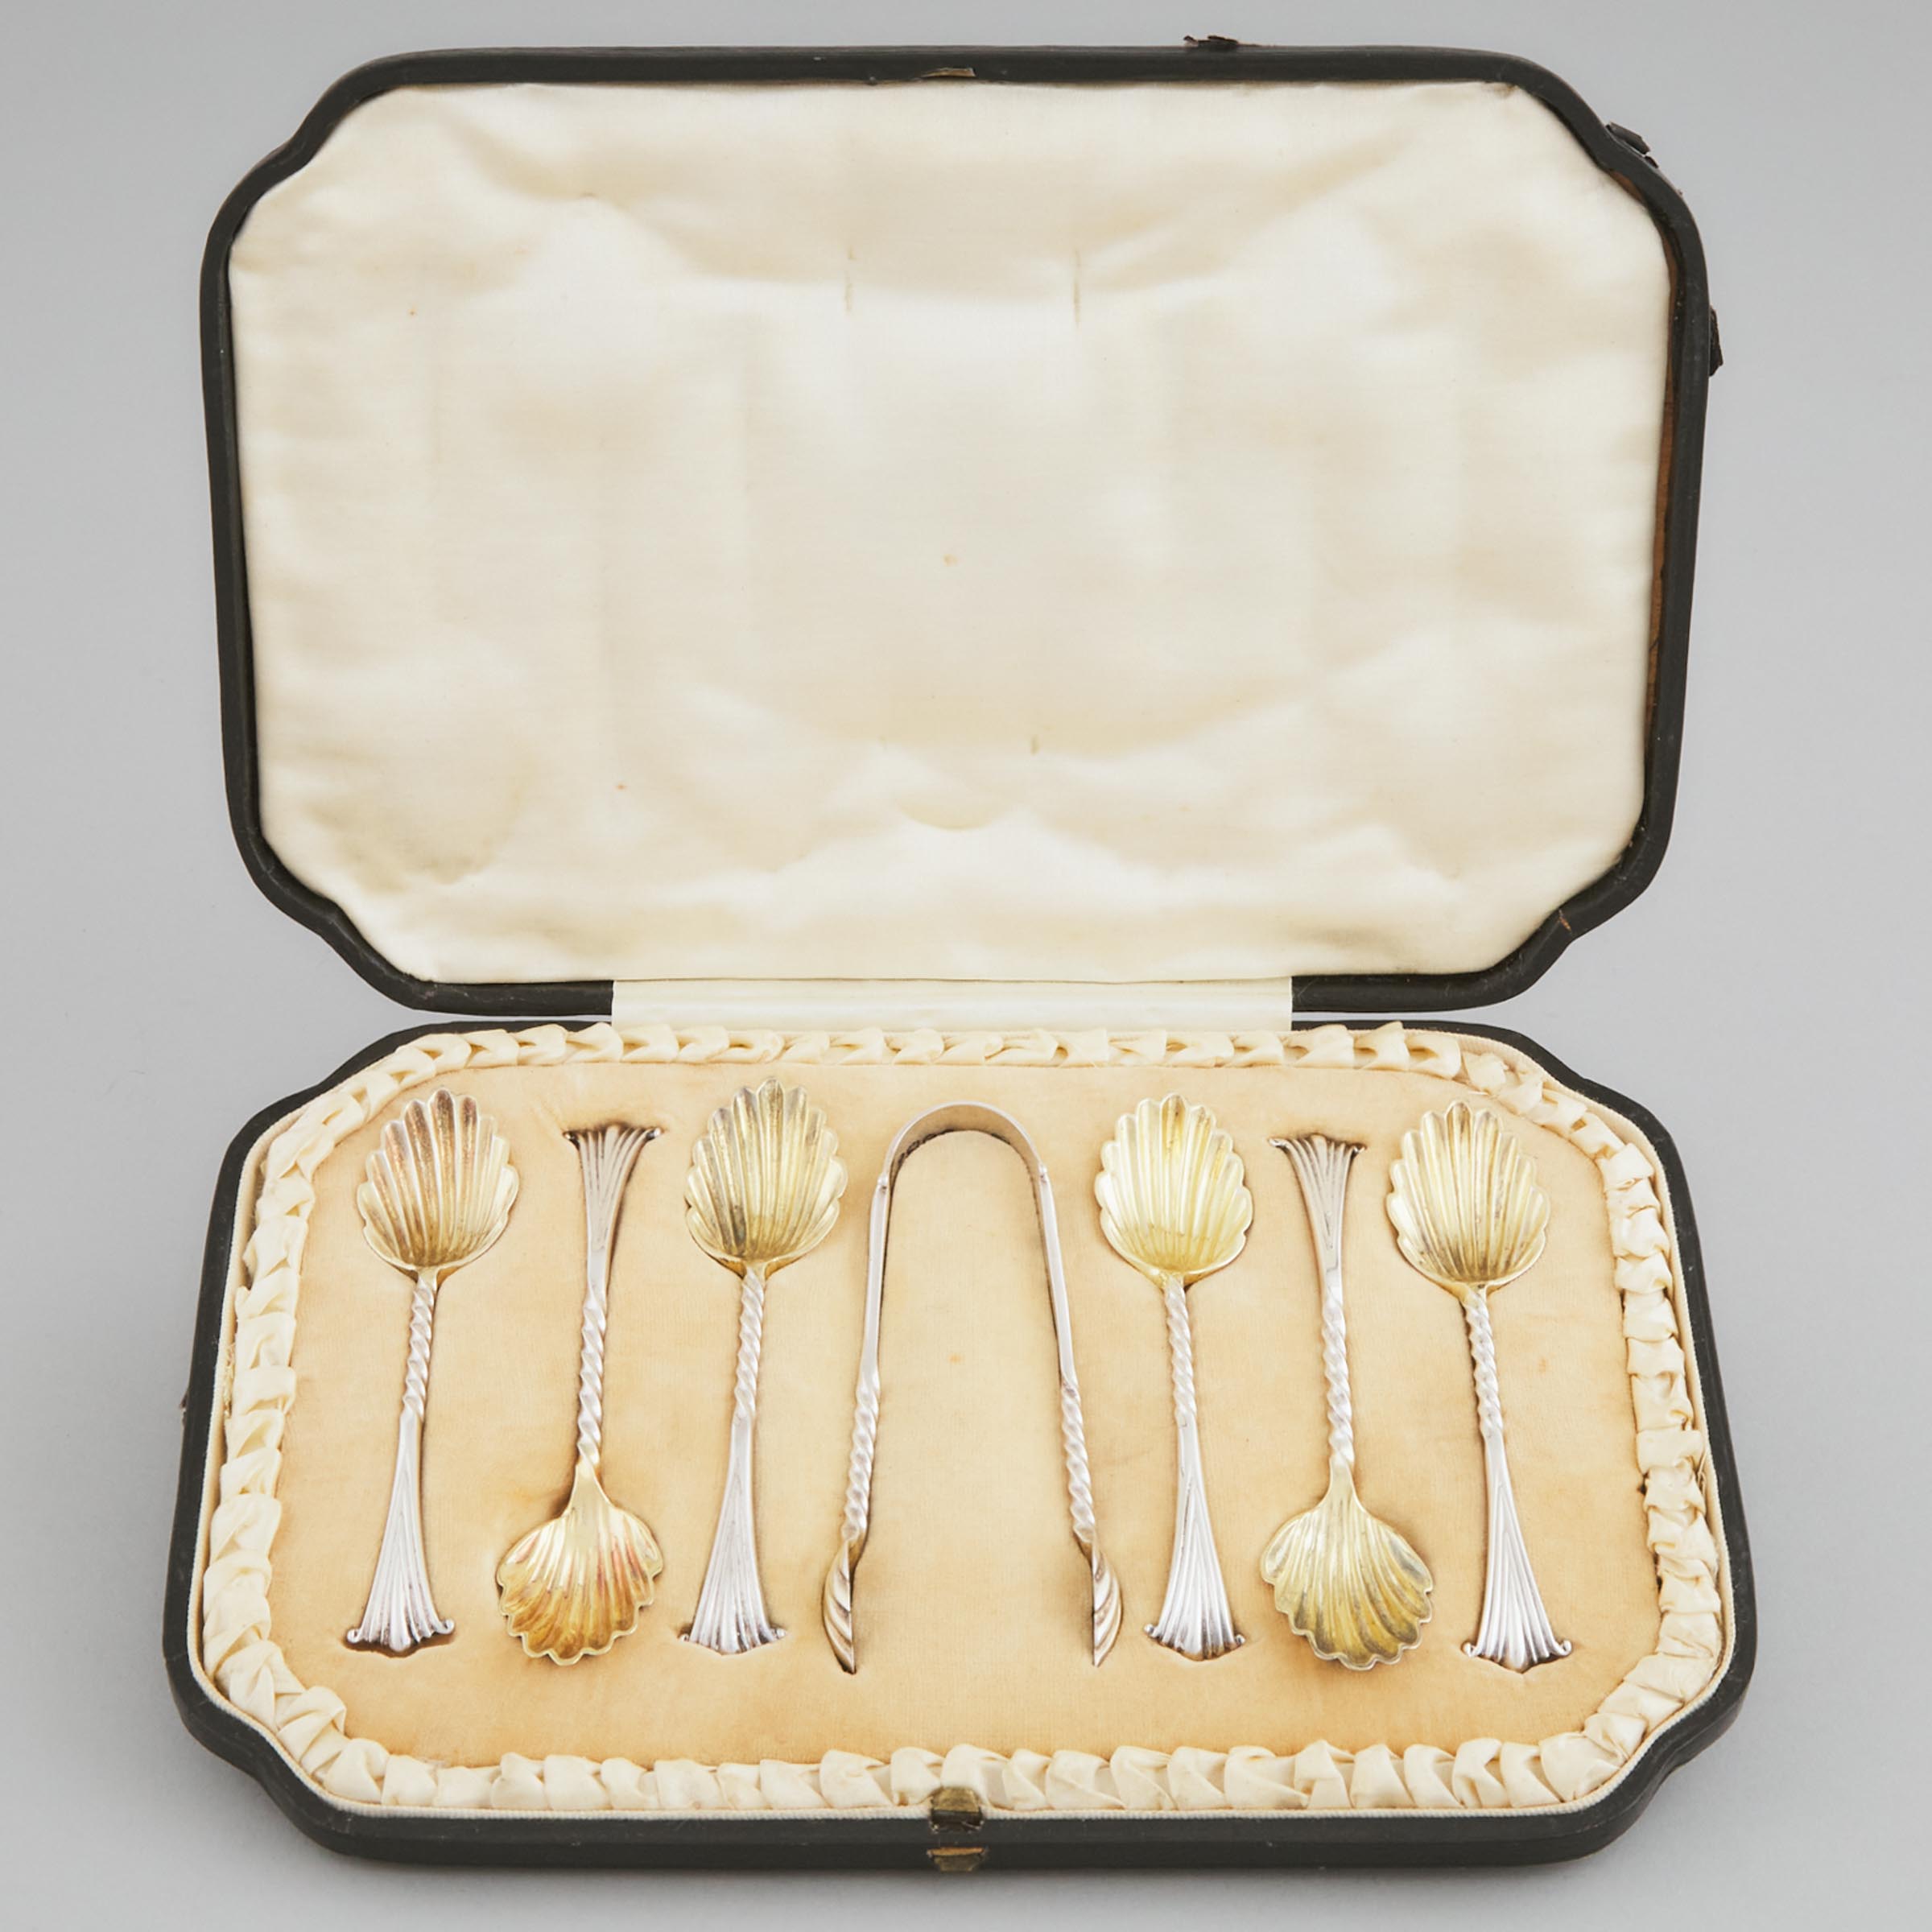 Six Victorian Silver Onslow Pattern Tea Spoons and Sugar Tongs, Charles Boyton II, London, 1888